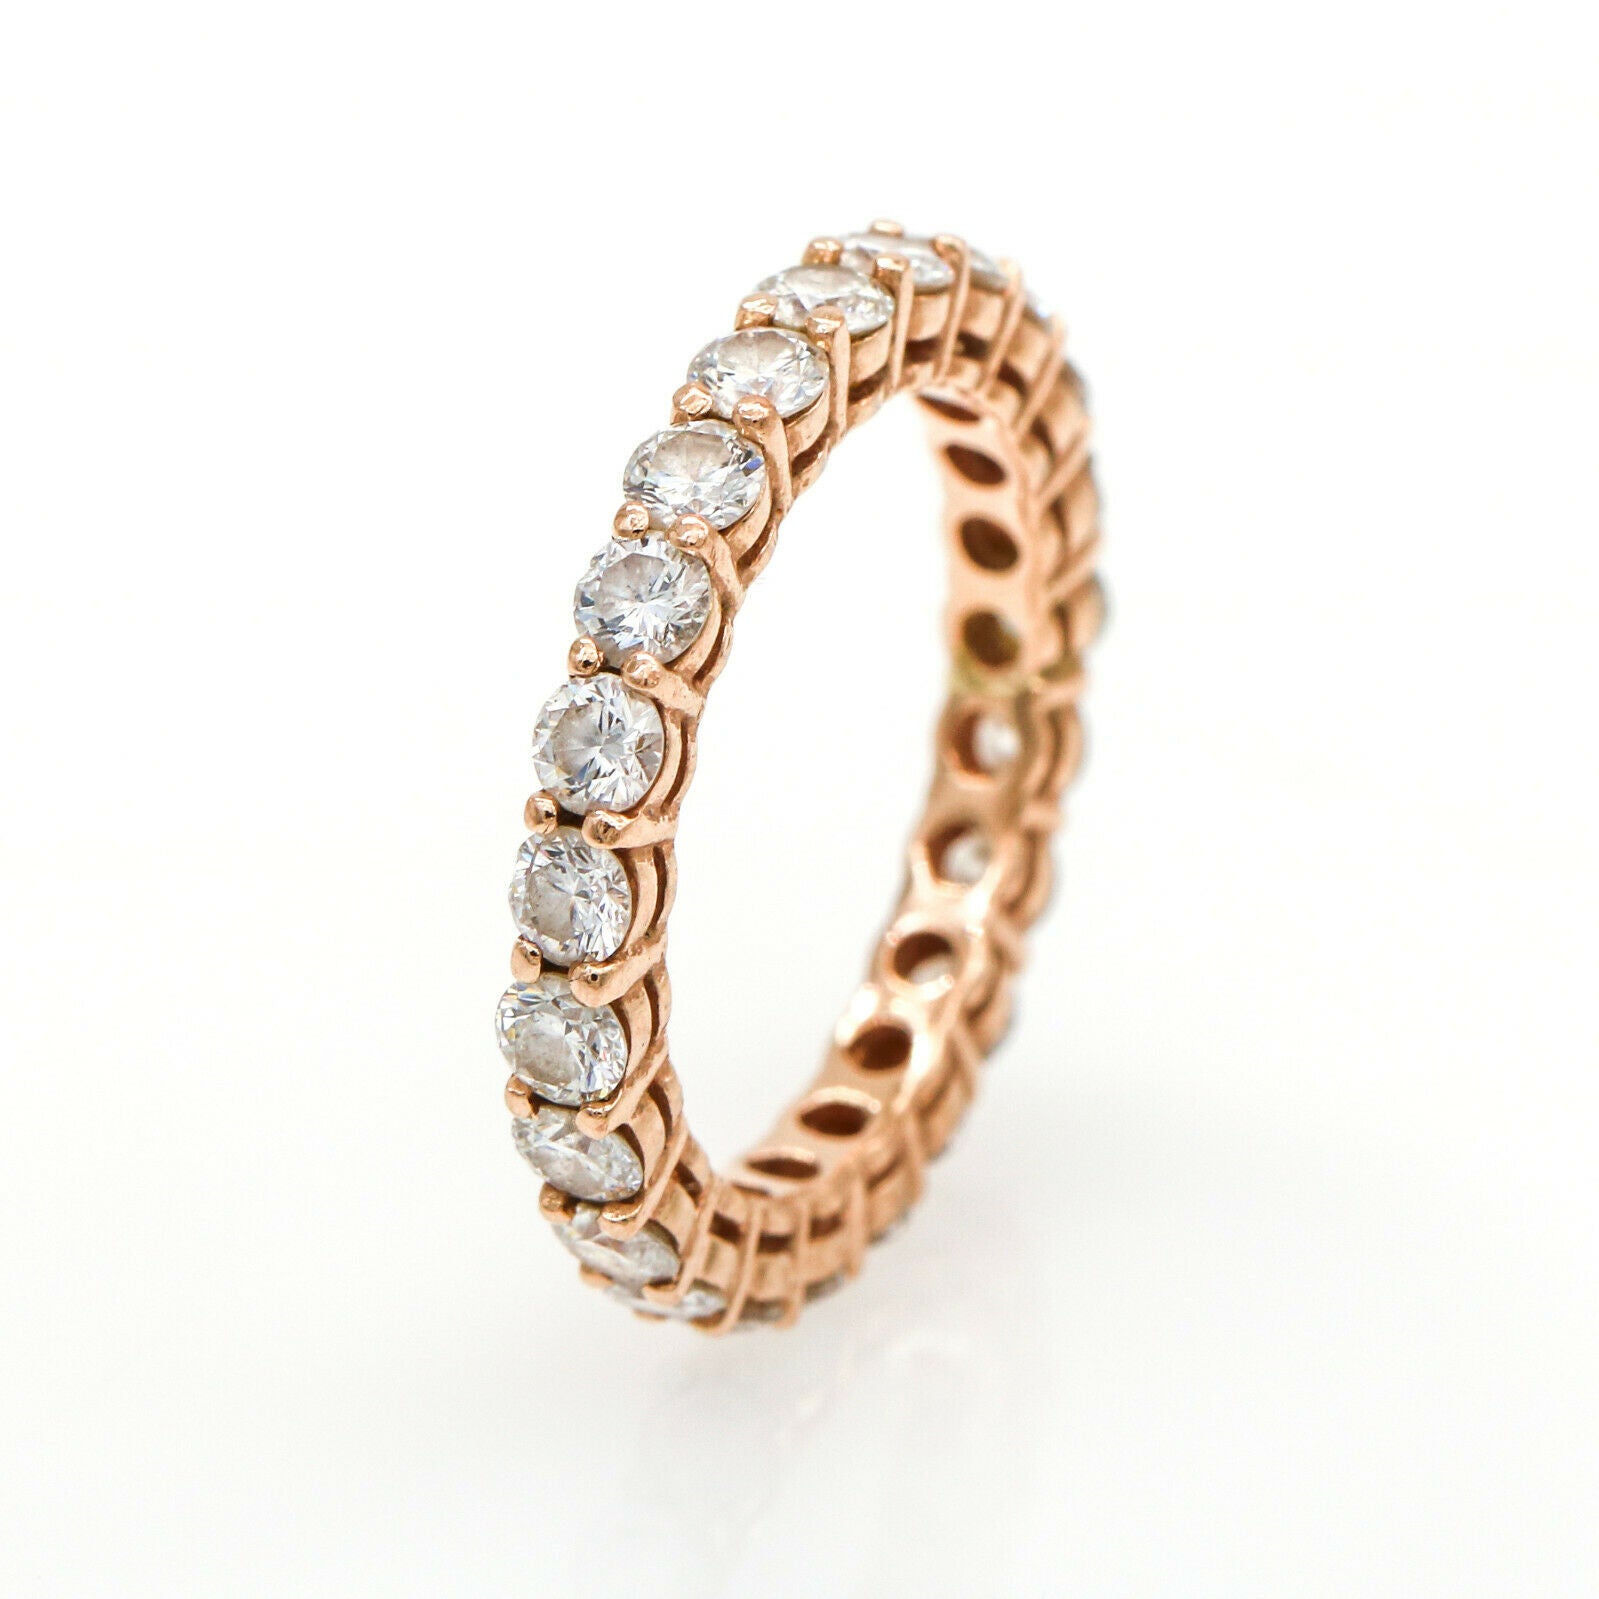 2.20 carat Diamond Eternity Band Ring in 14k Rose Gold